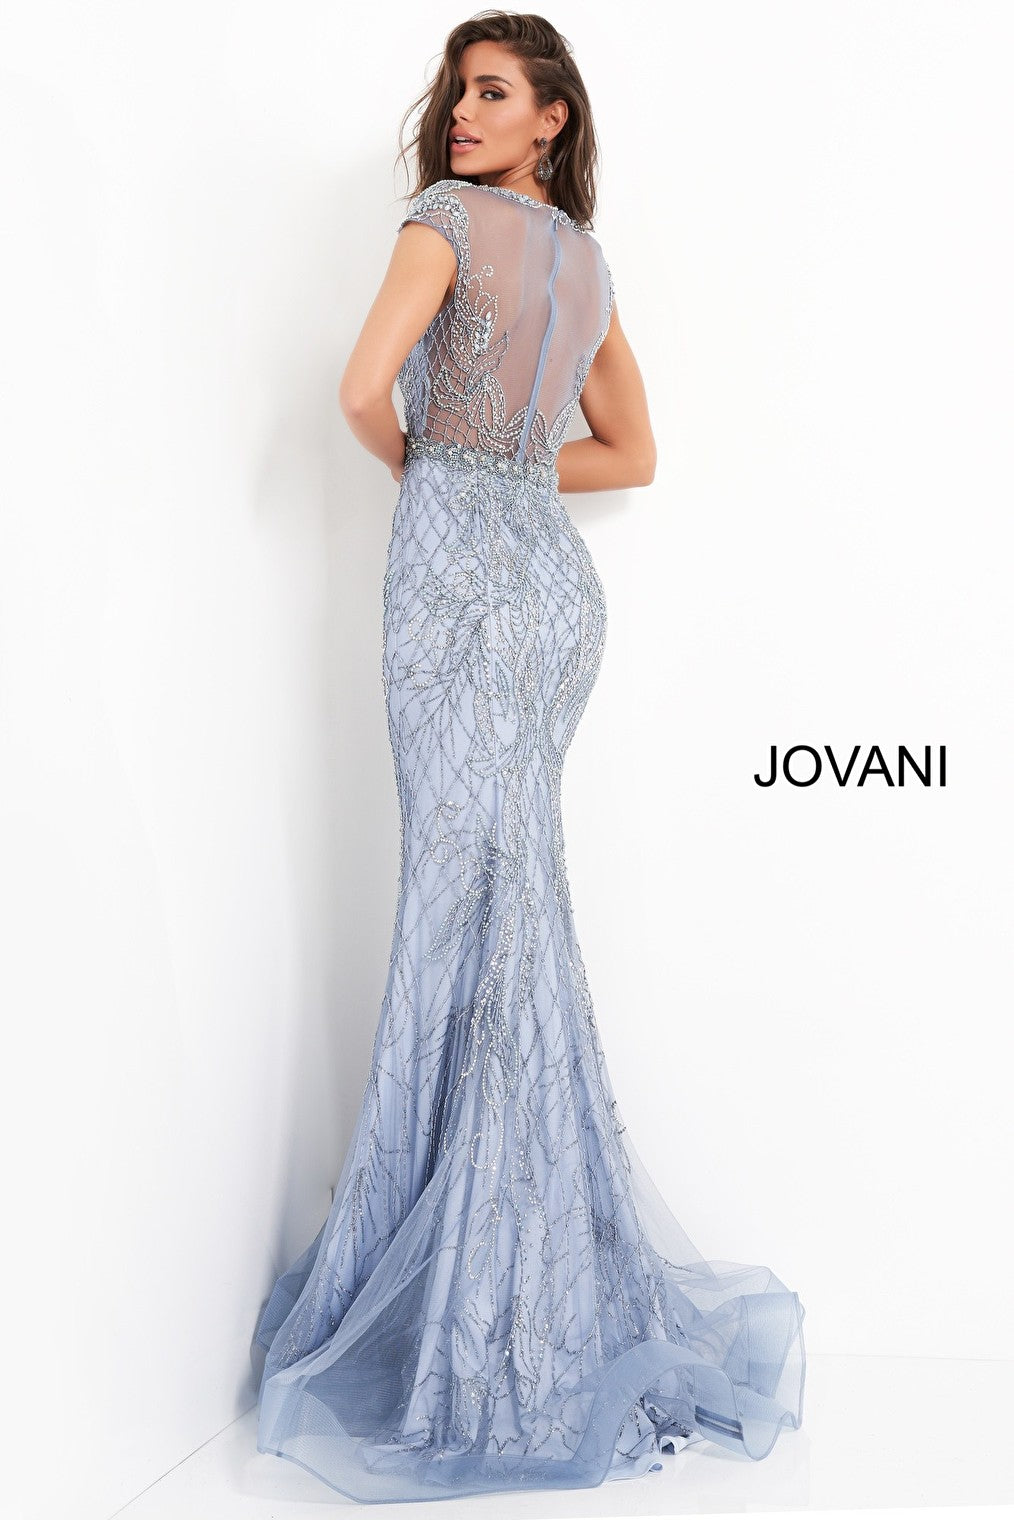 Sheer back Jovani evening dress 00883